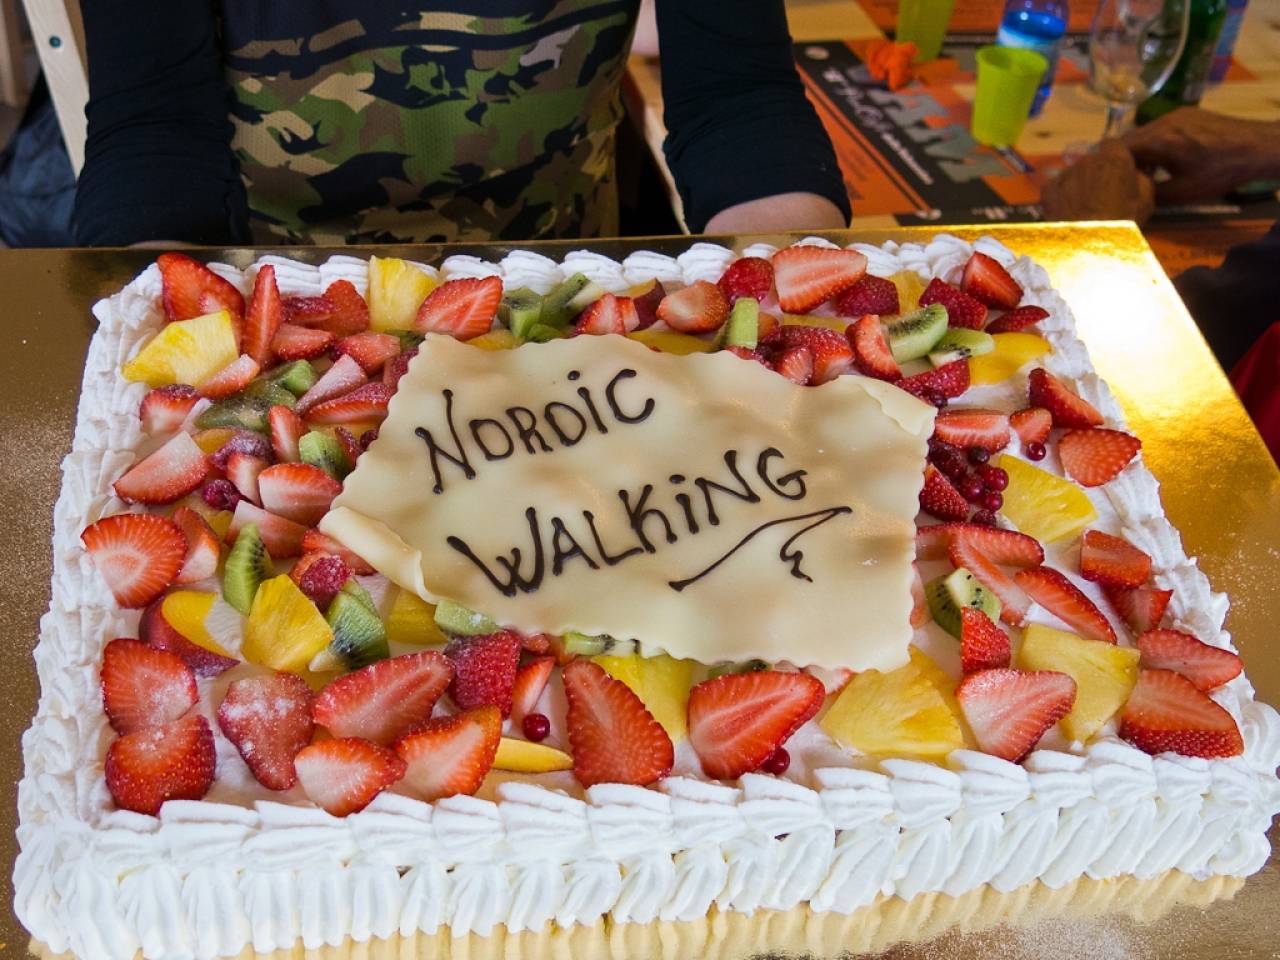 Nordic Walking Pizza: Valsassina - 2014